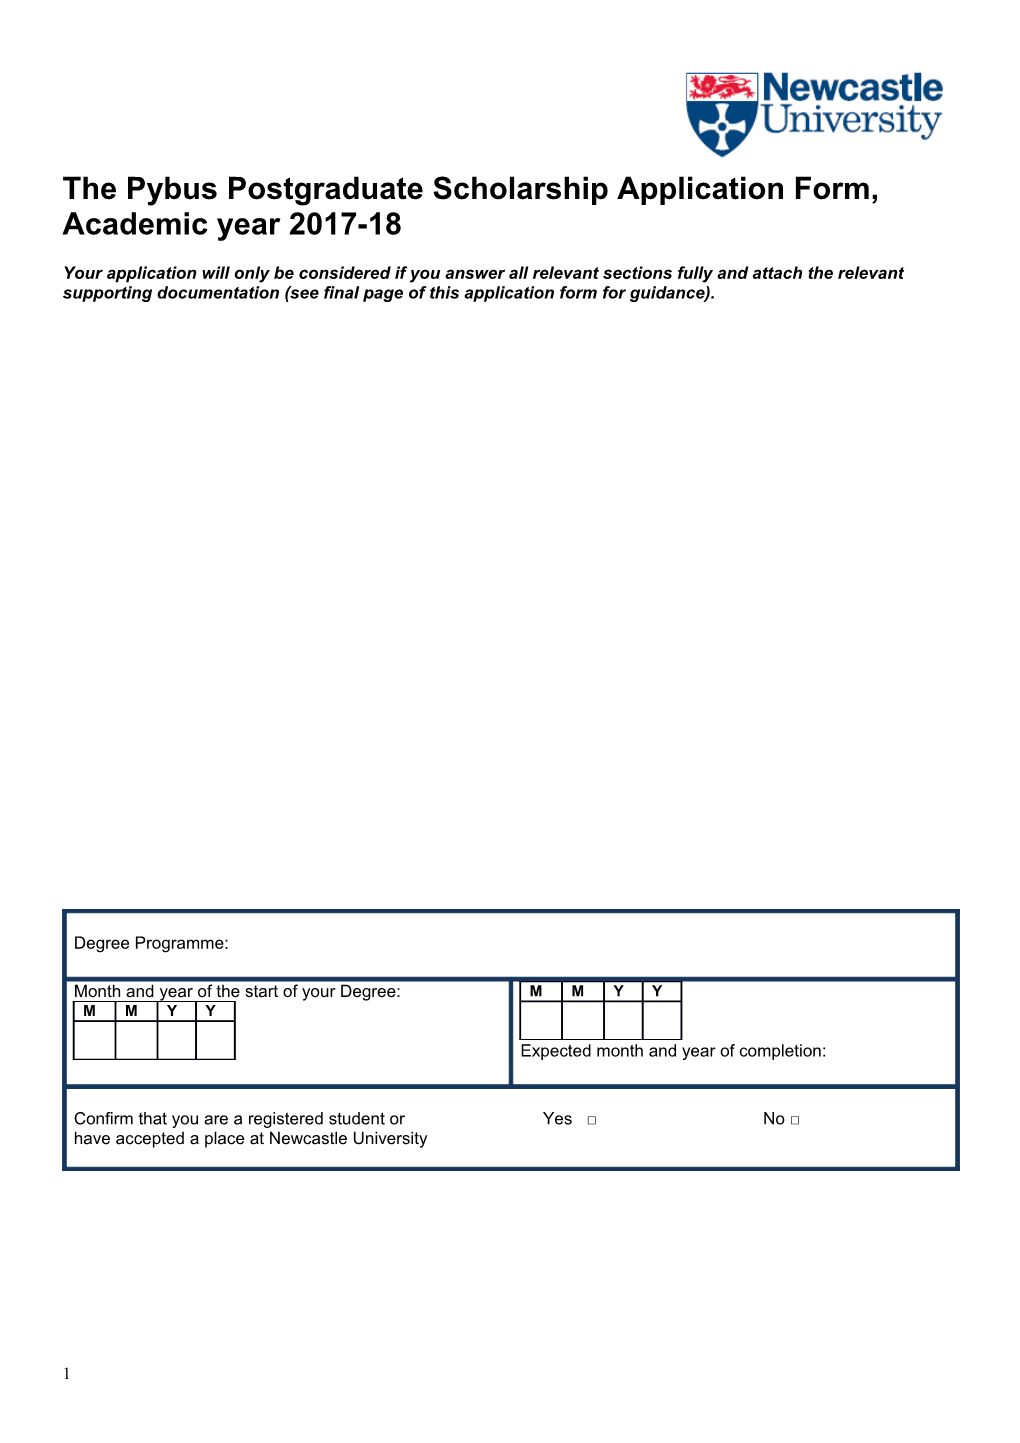 The Pybus Postgraduate Scholarship Application Form, Academic Year 2017-18